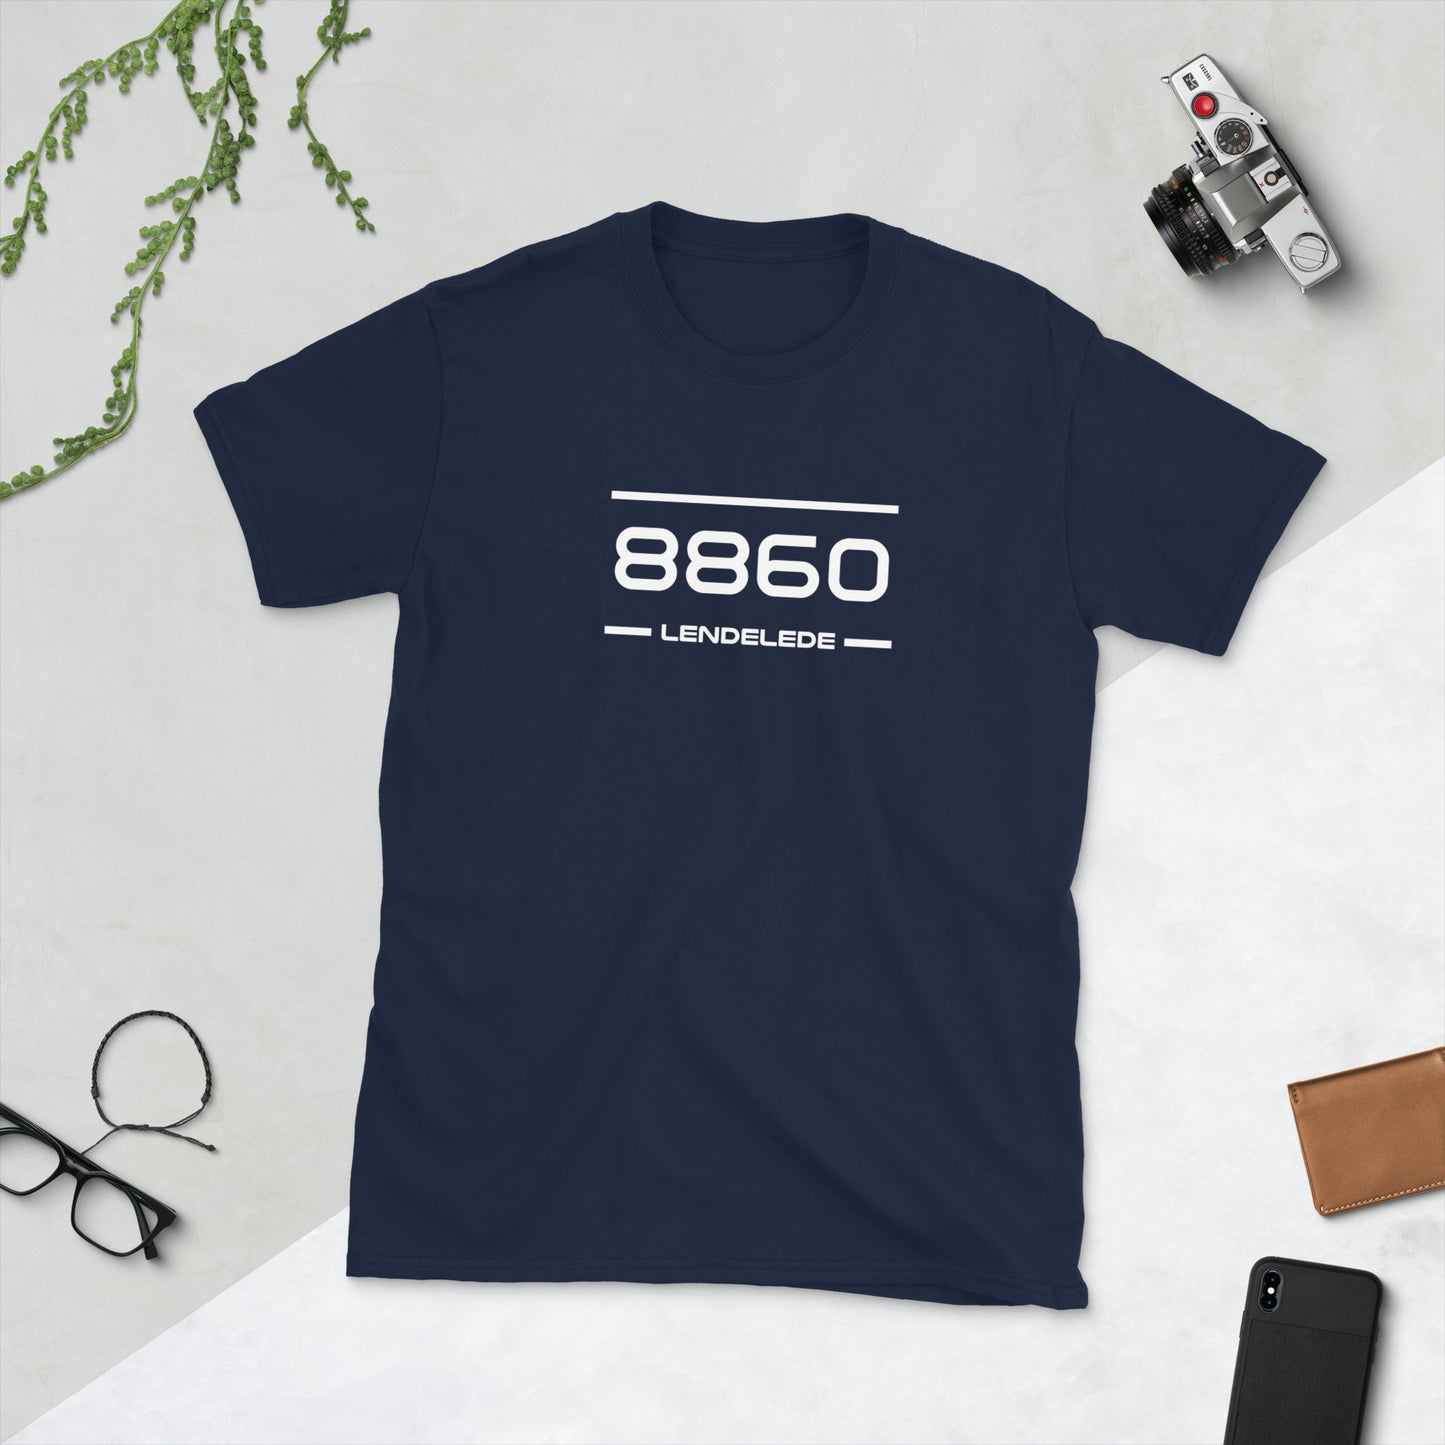 Tshirt - 8860 - Lendelede